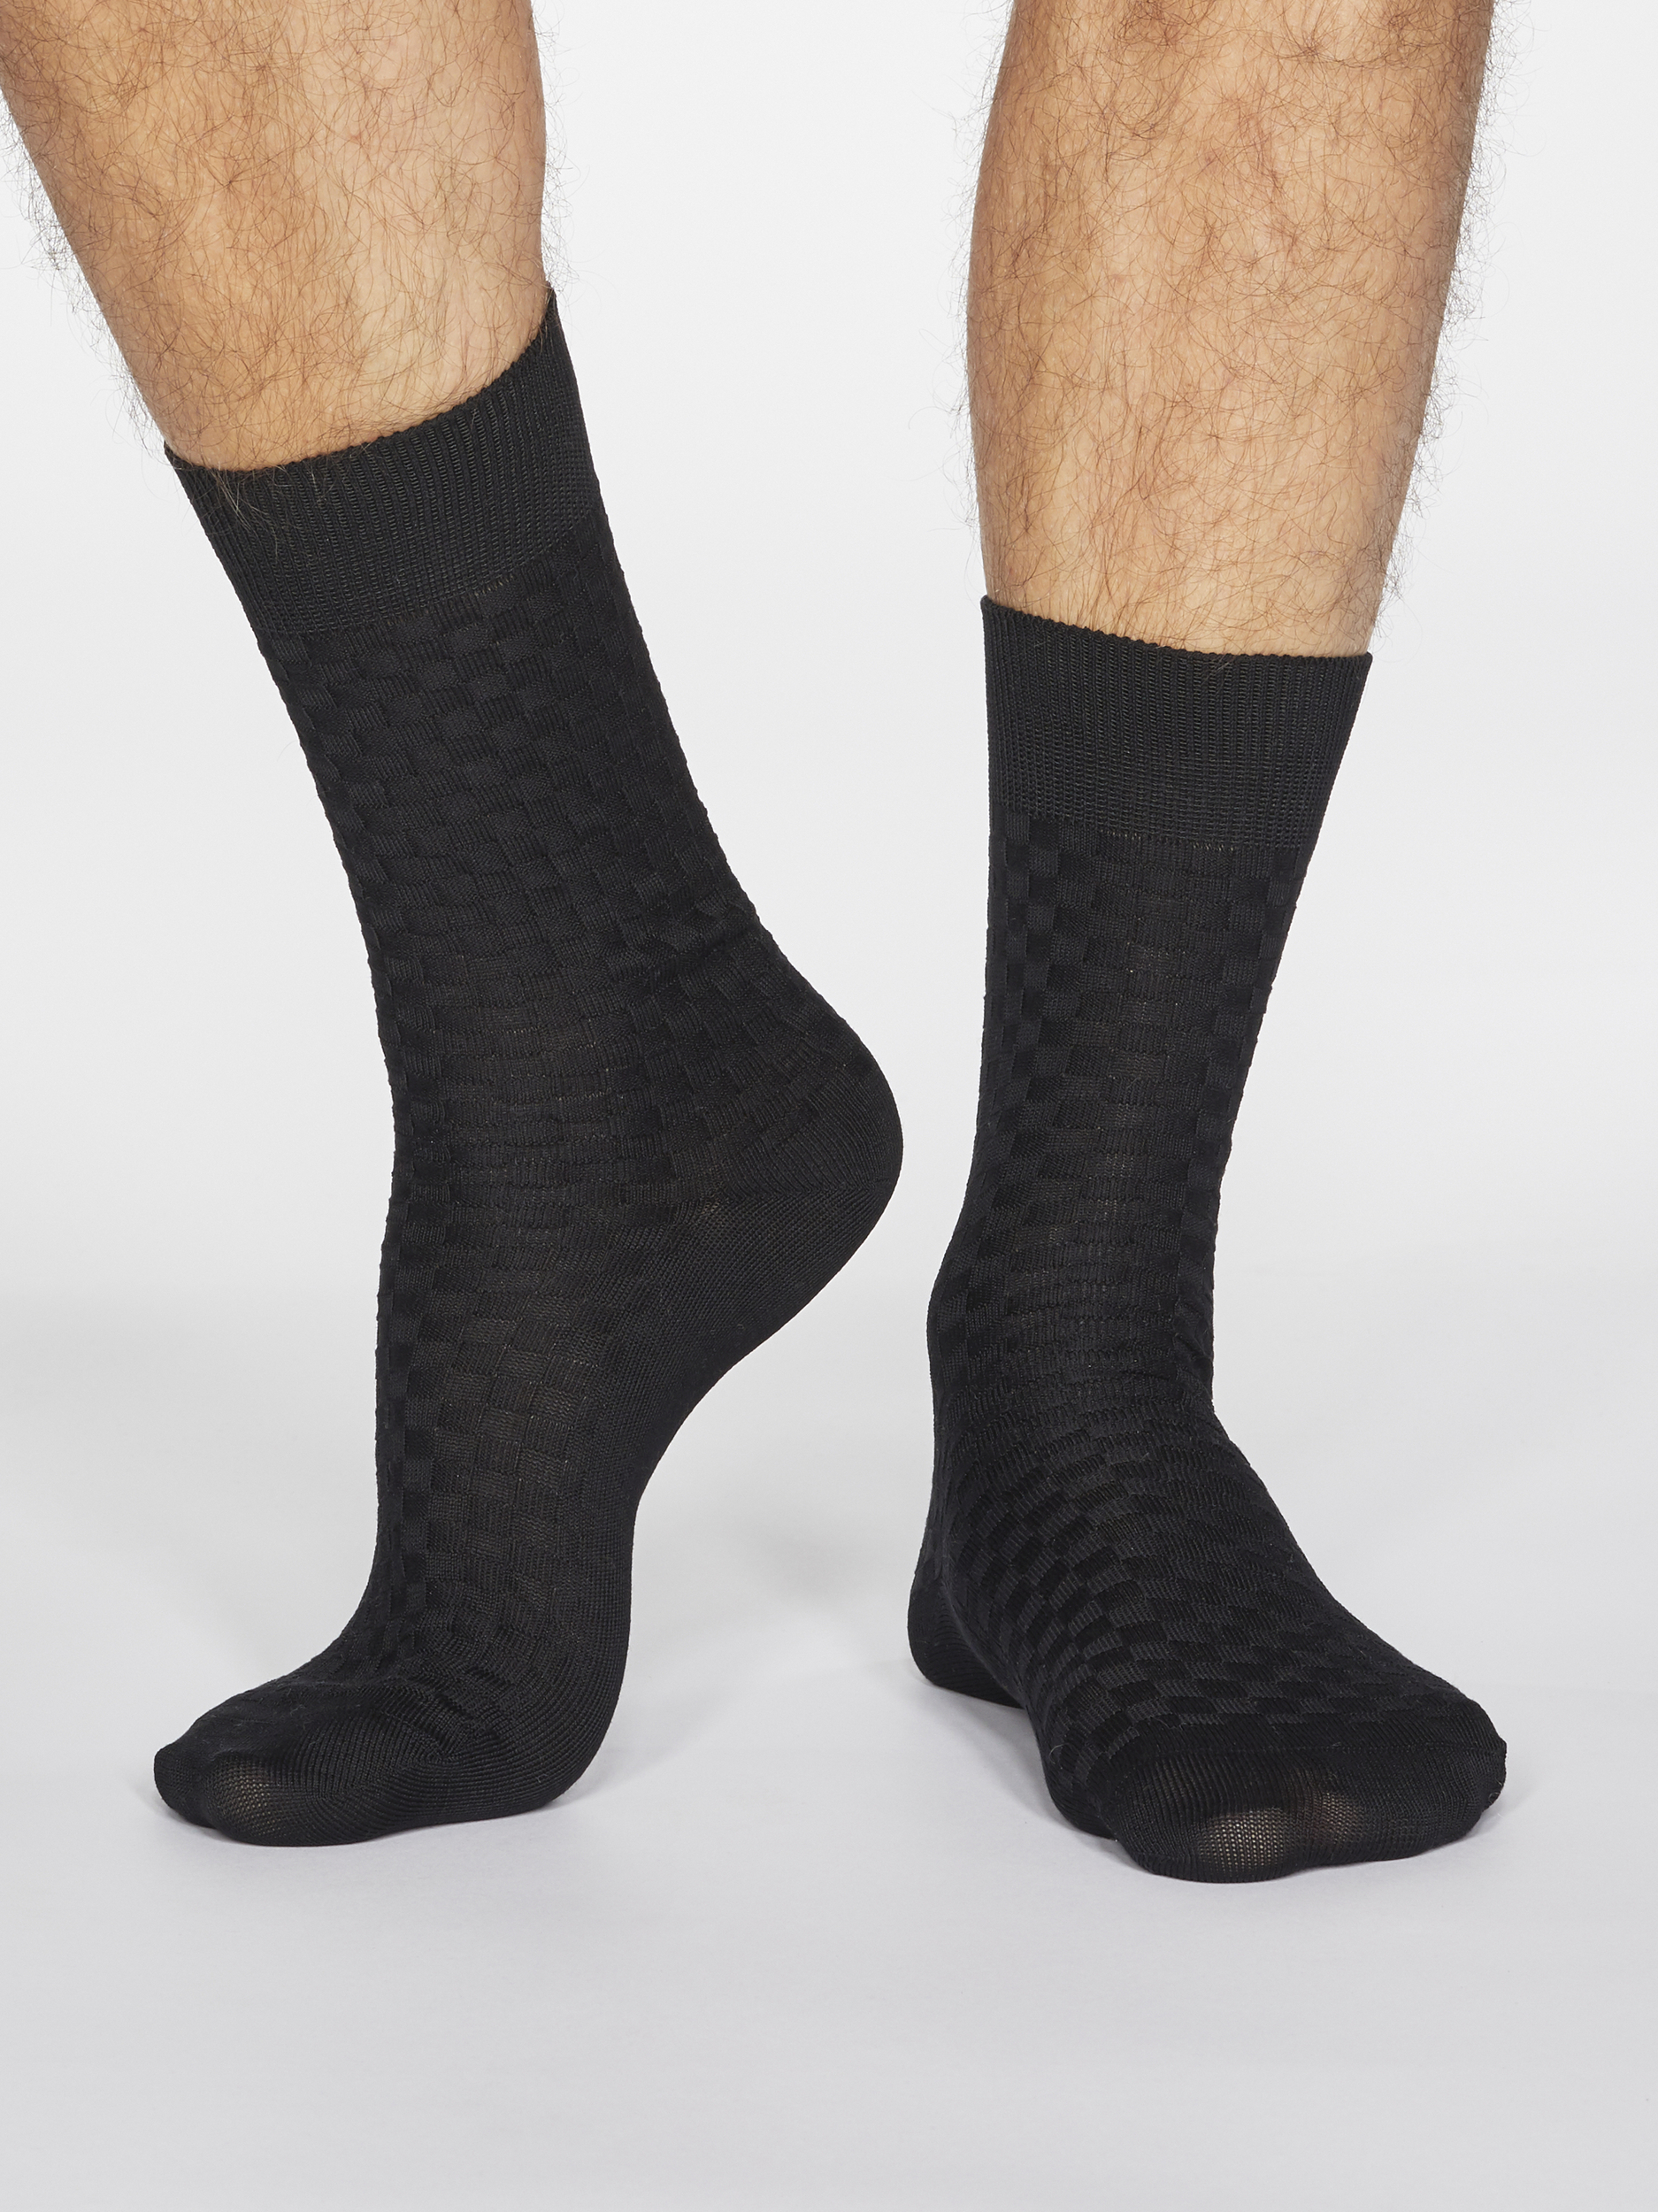 SPM640-BLACK--Cameron-Organic-Cotton-Mens-Suit-Socks-in-Black-2F